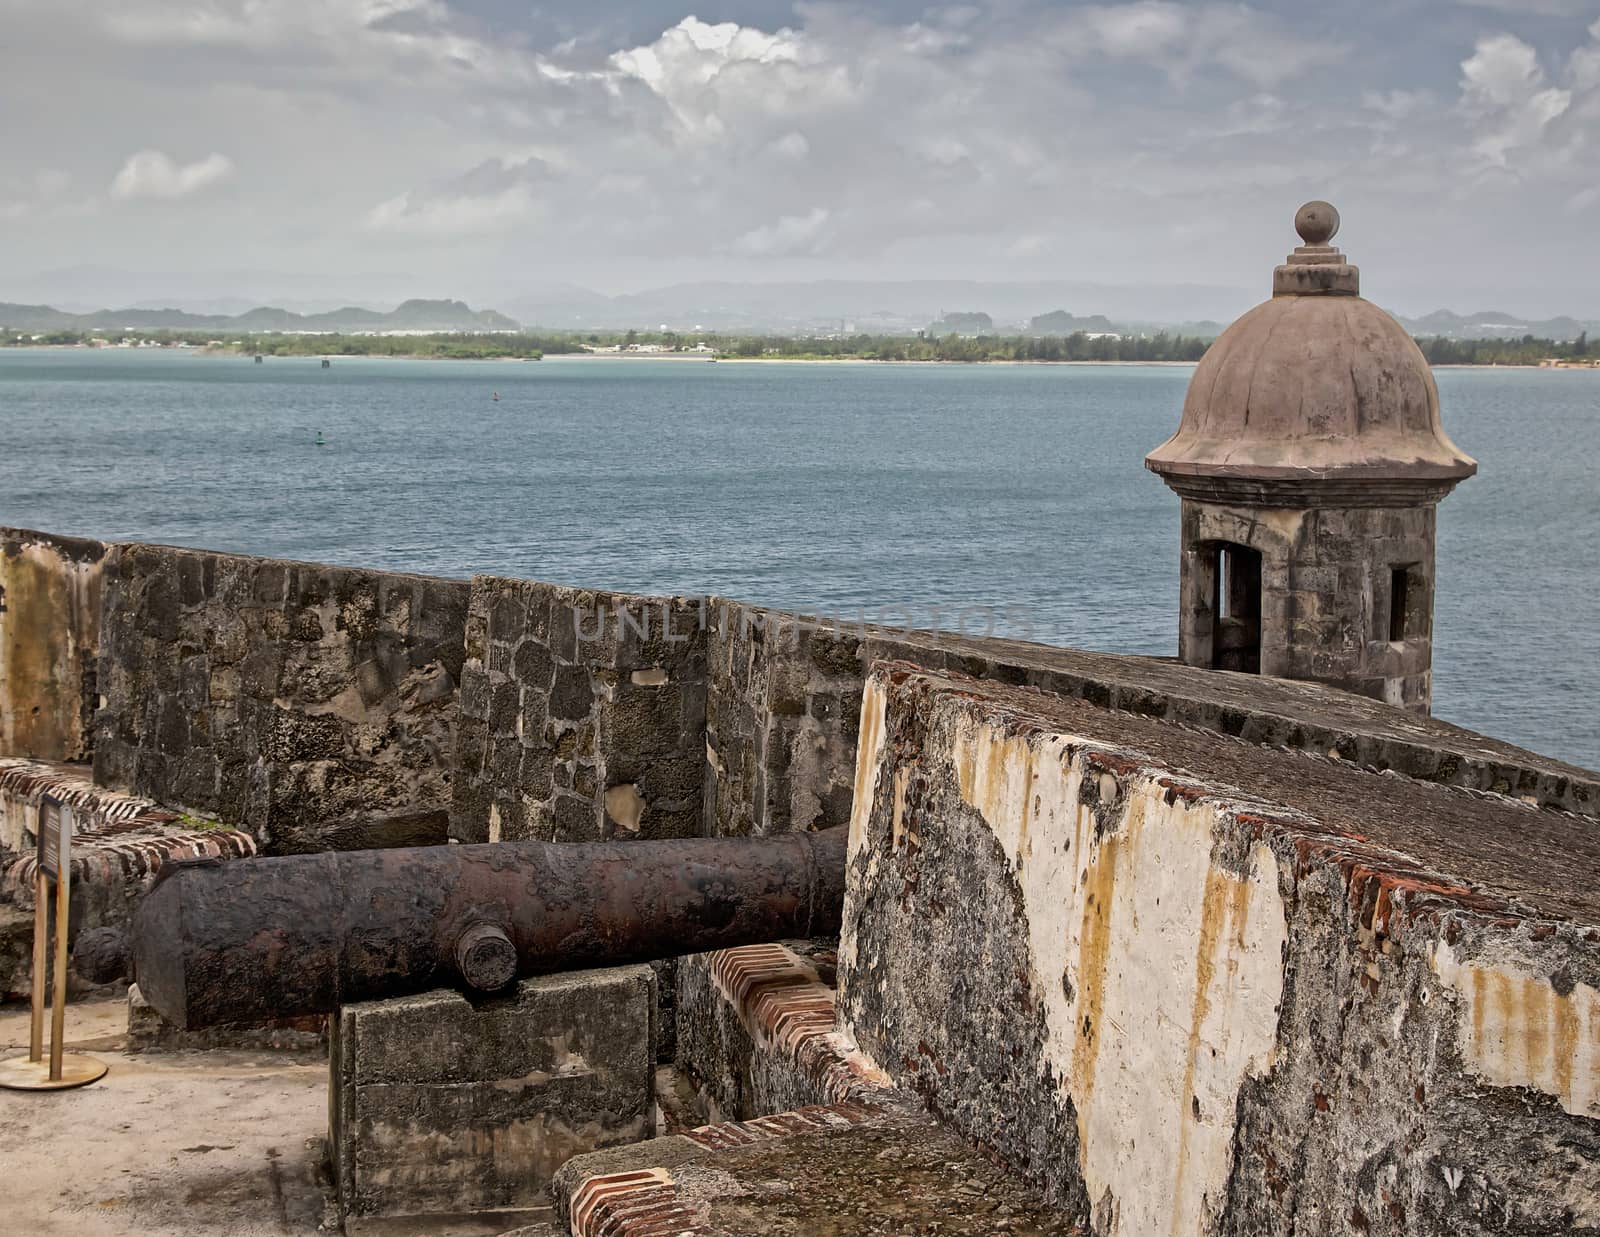 Cannon at the Harbor in San Juan by teacherdad48@yahoo.com